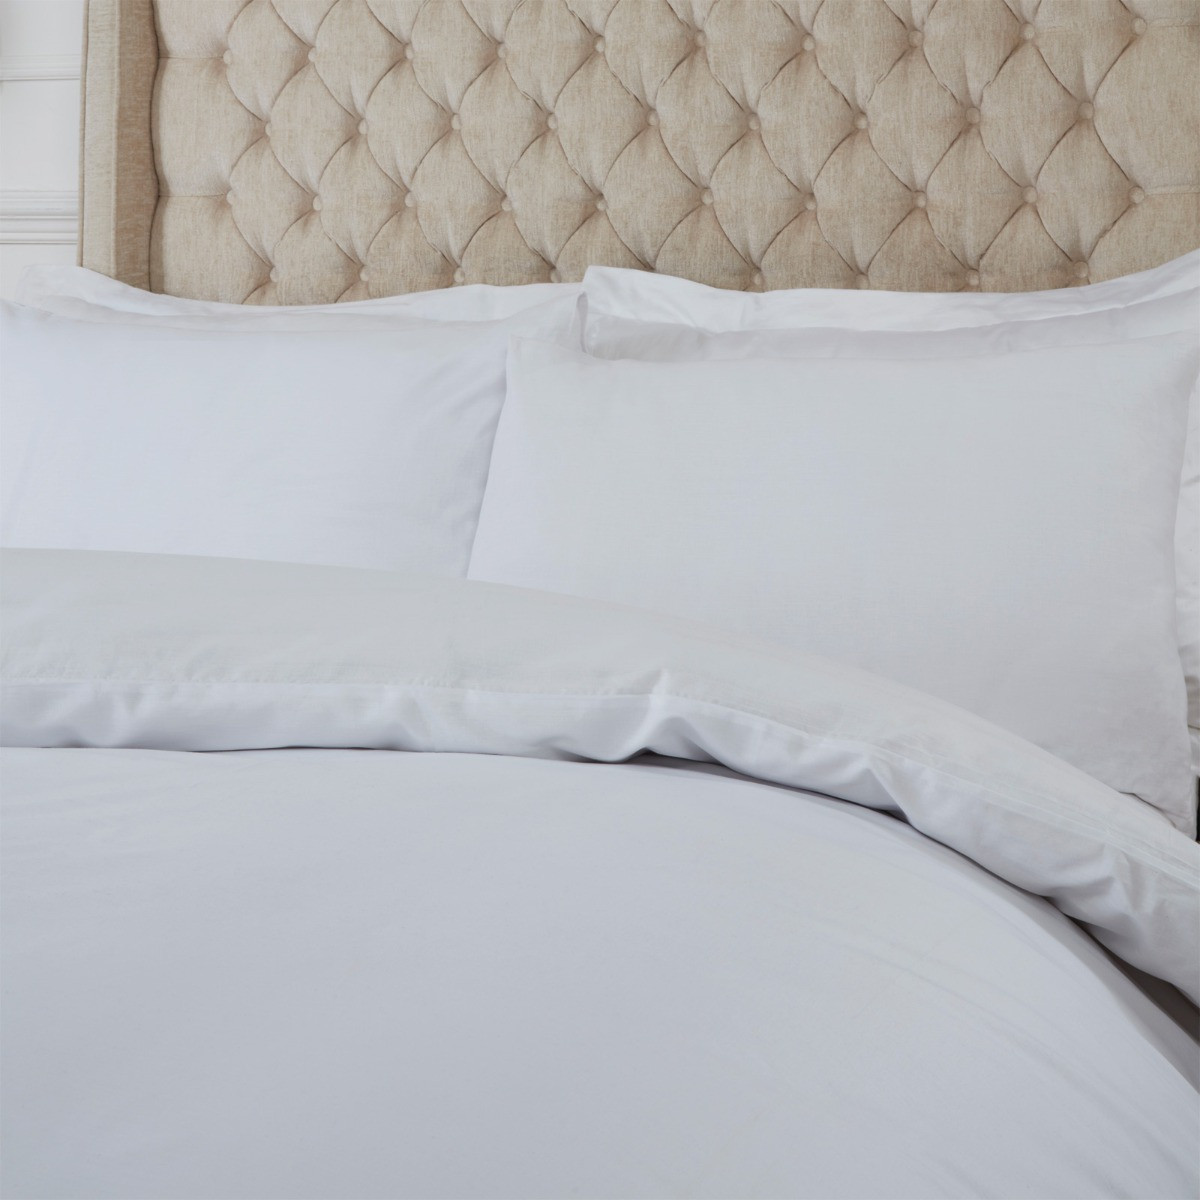 Highams Plain 100% Cotton Duvet Cover with Pillow Case Bedding Set, White - Super King>